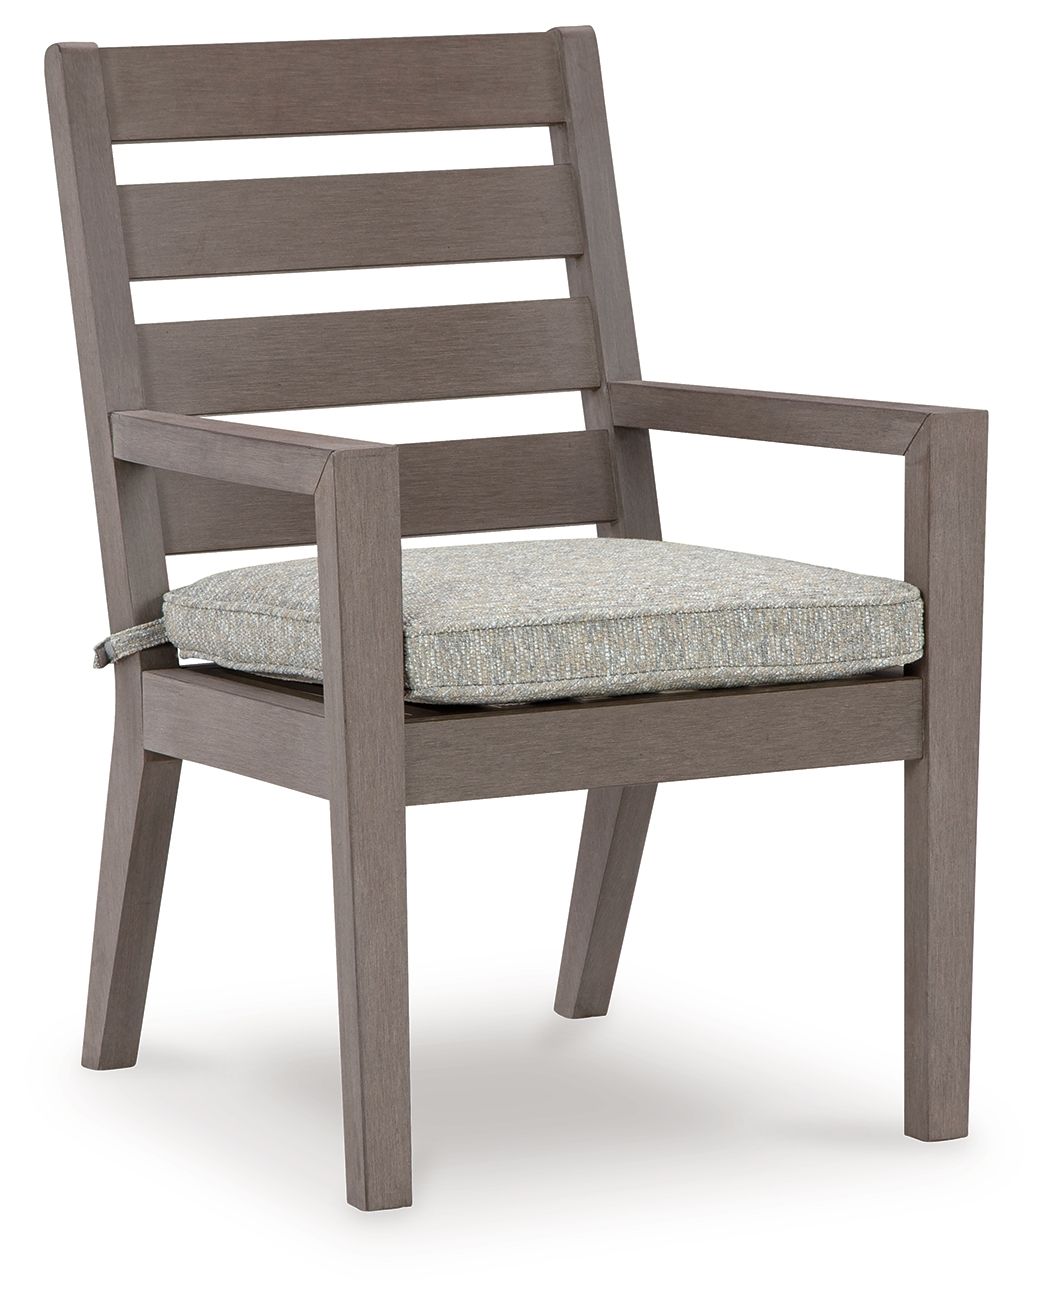 Hillside Barn - Gray / Brown - Arm Chair With Cushion (Set of 2) - 5th Avenue Furniture